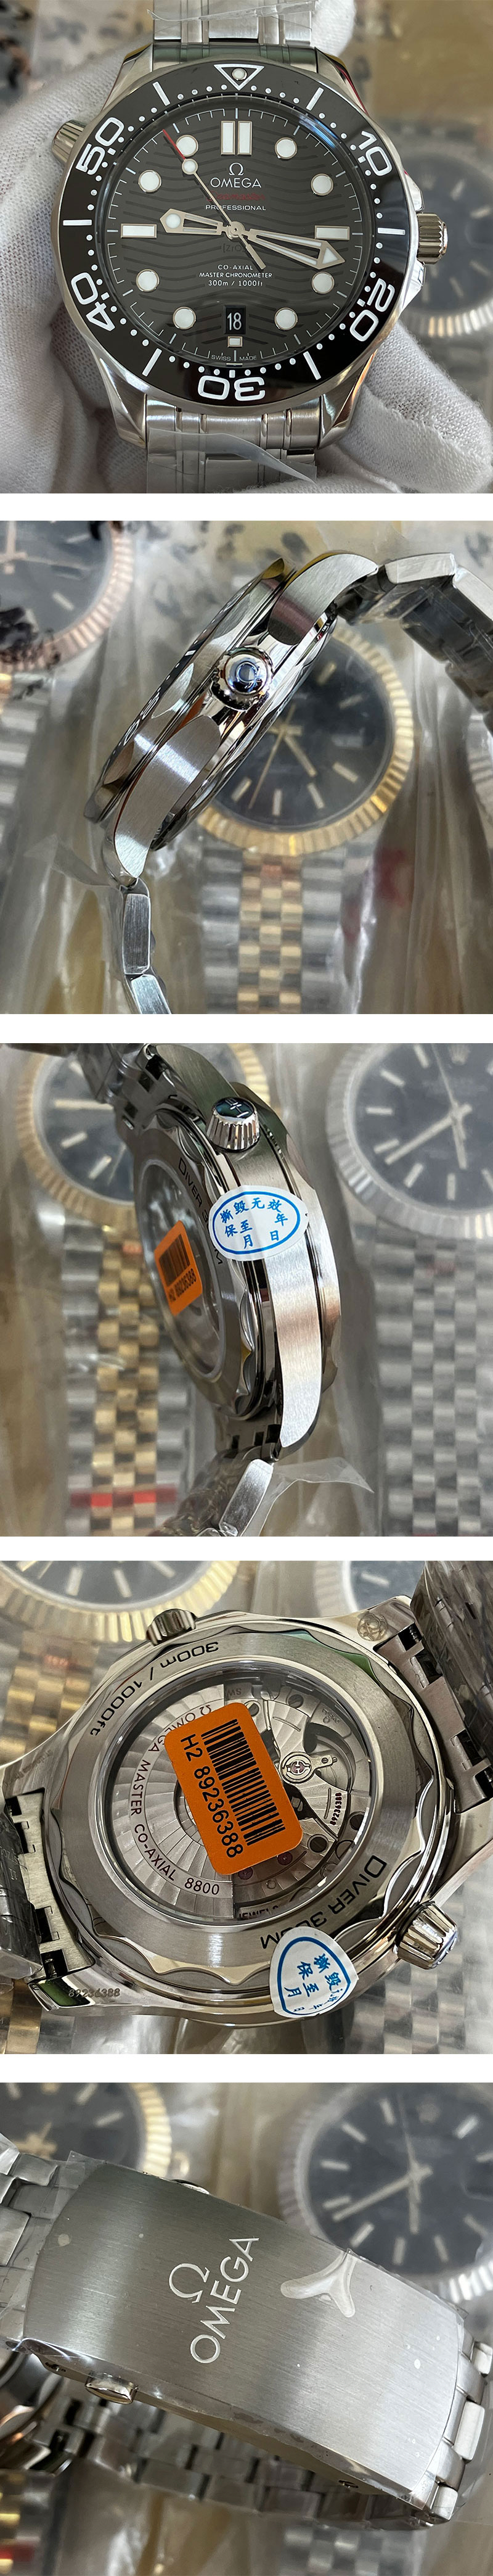 VS最新入荷オメガスーパーコピー時計 シーマスター ダイバー 300M コーアクシャル マスタークロノメーター 210.30.42.20.01.001